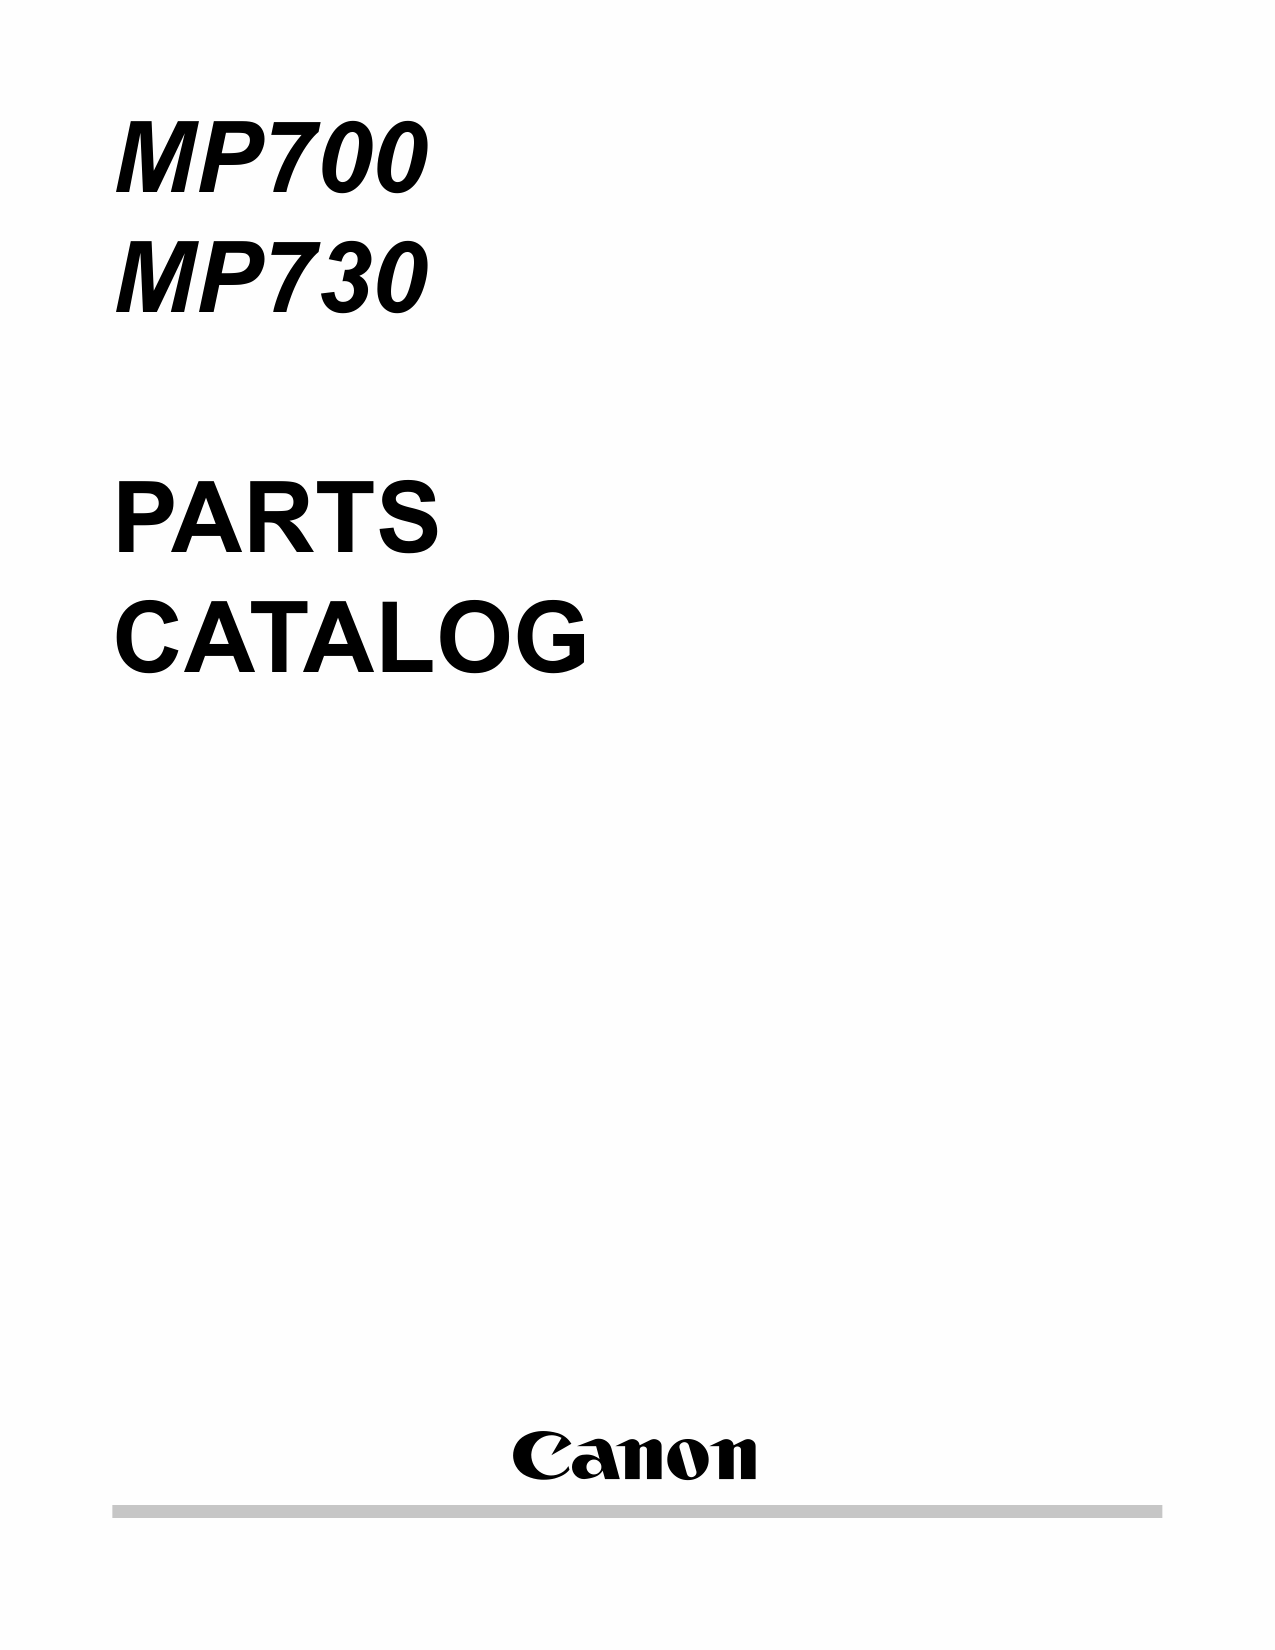 Canon PIXMA MP700 MP730 Parts Catalog Manual-1